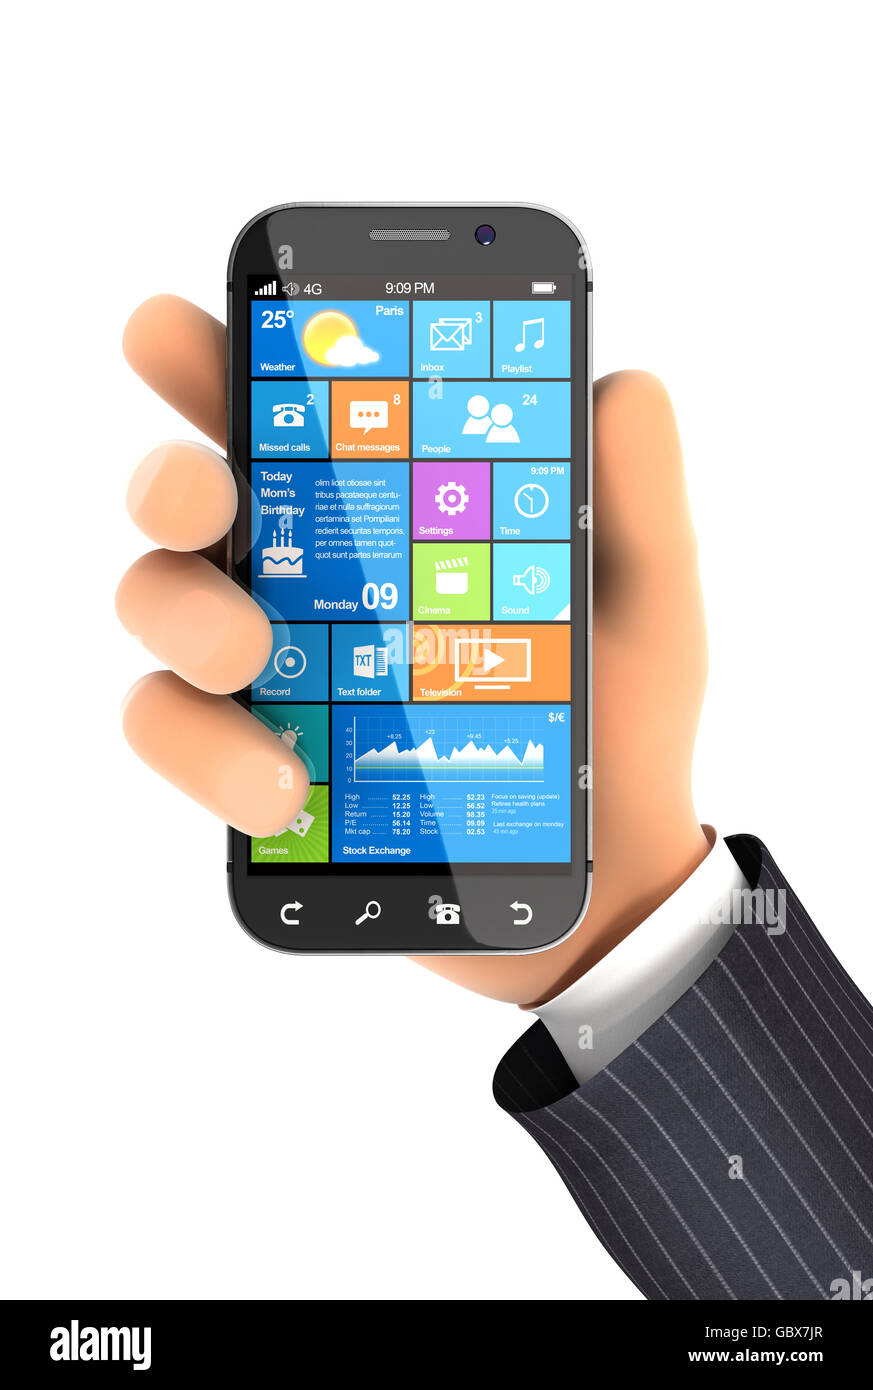 3d hand holding smartphone, illustration avec fond blanc isolé Banque D'Images